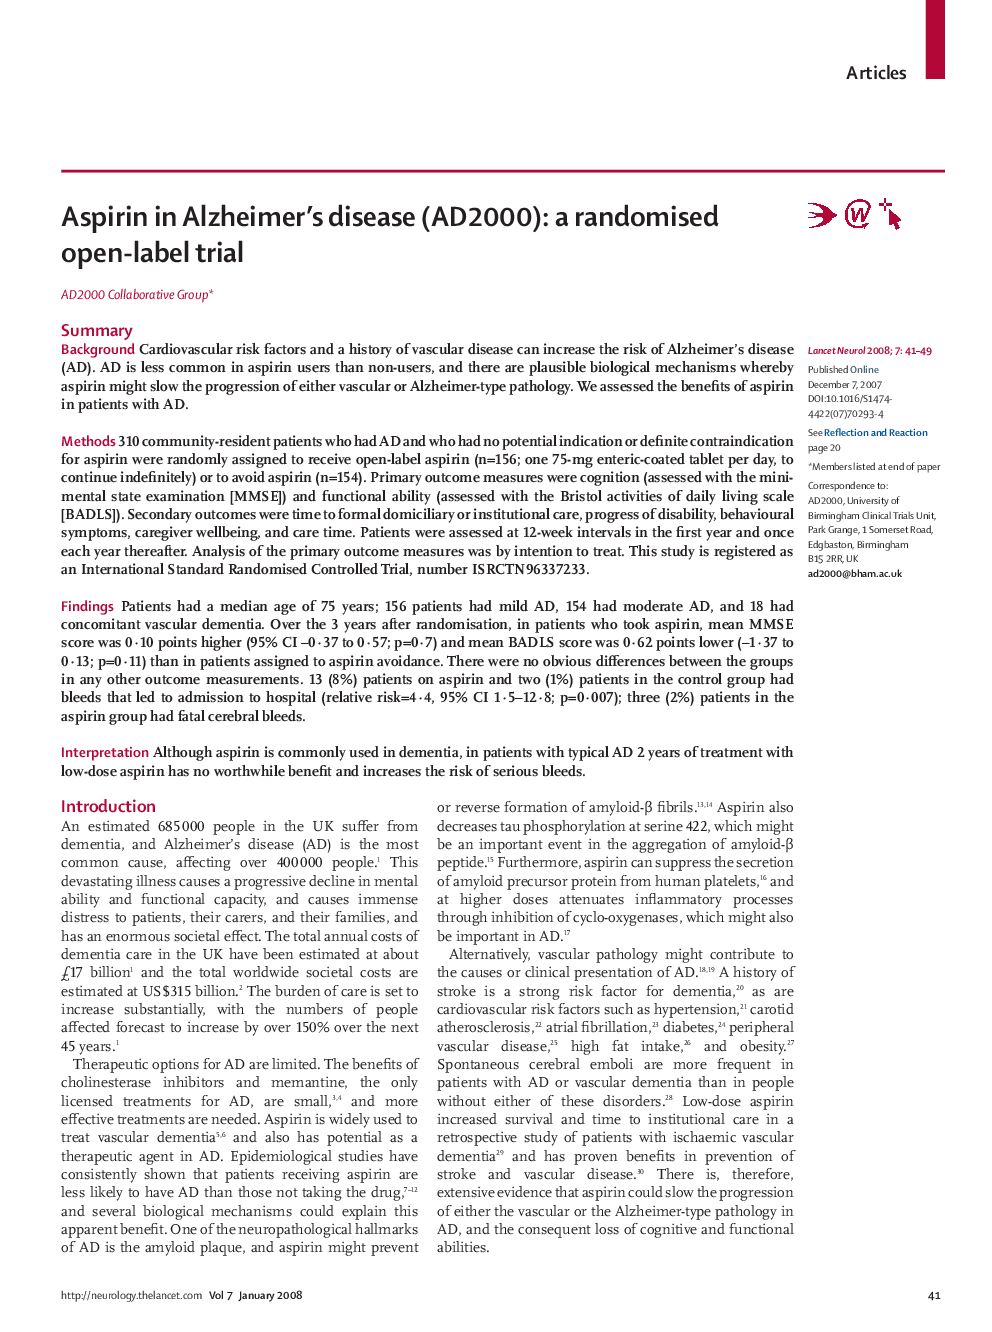 Aspirin in Alzheimer's disease (AD2000): a randomised open-label trial